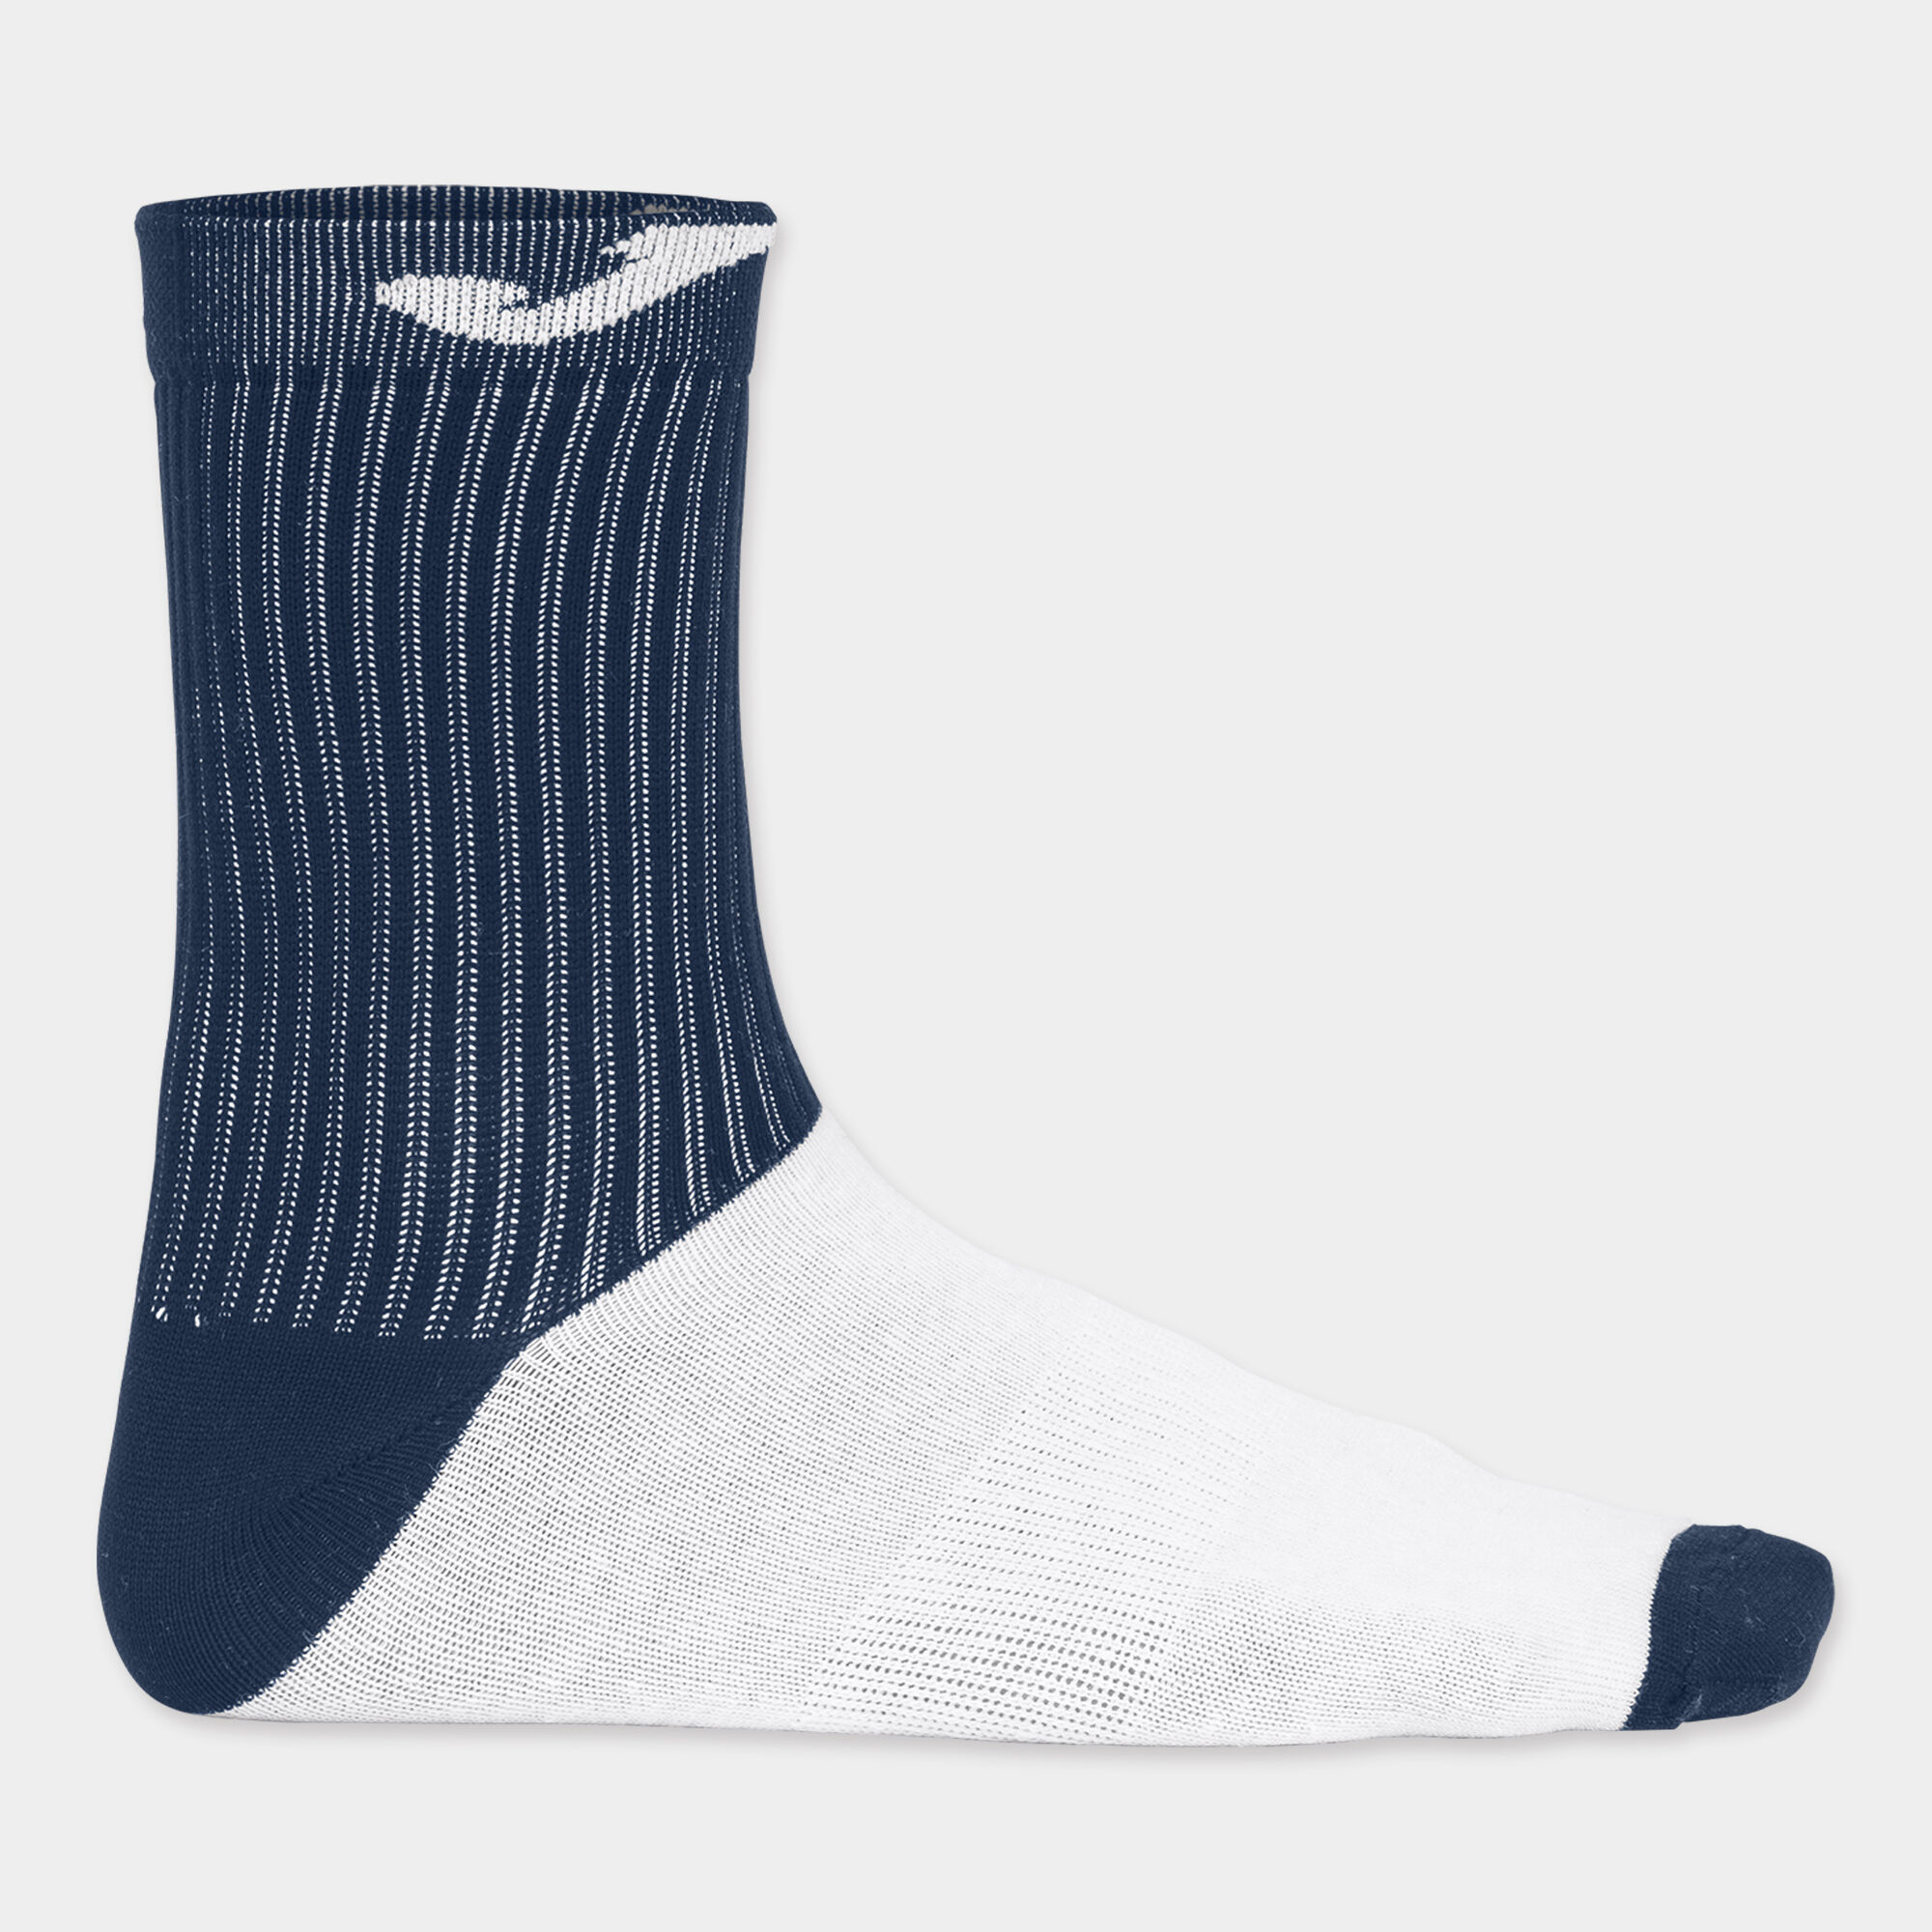 Socks unisex navy blue